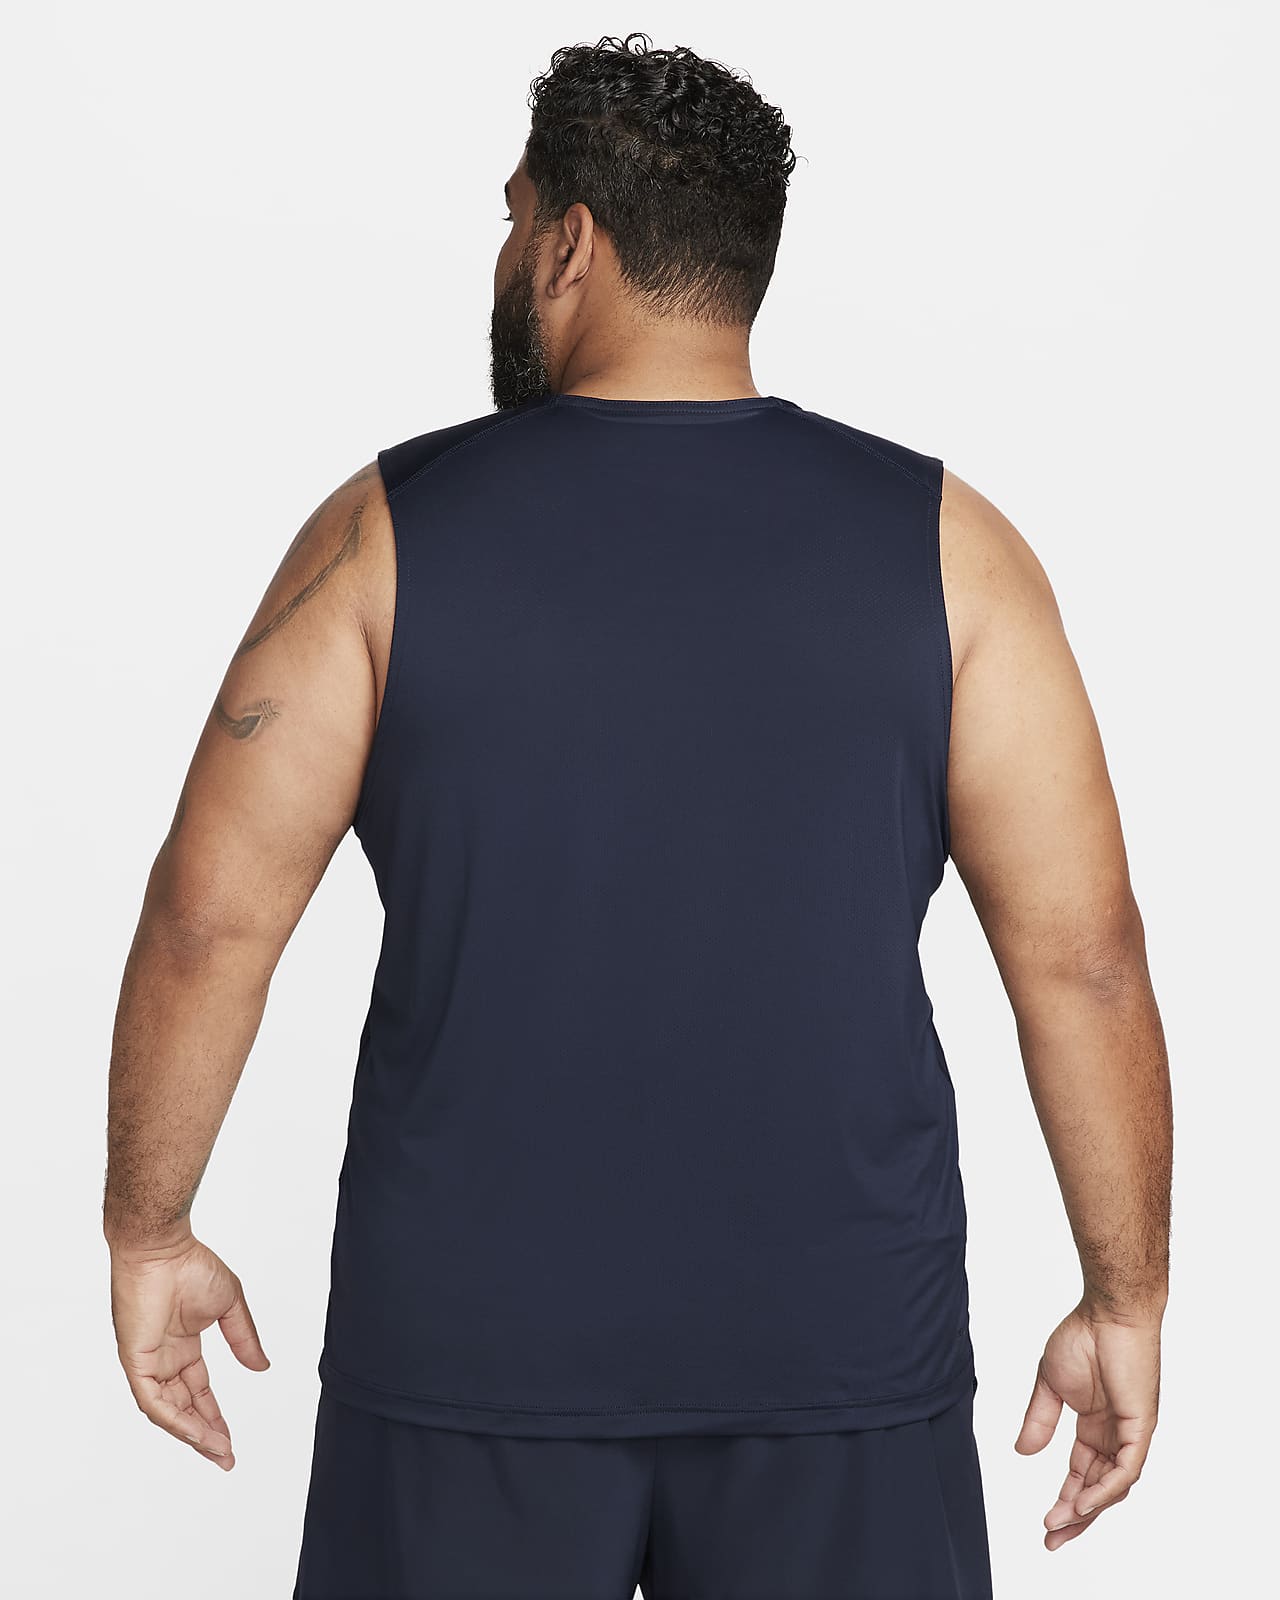 Nike Mens Dri-Fit Performance Yoga Tank Top Grey Size XL LARGE NEW $50